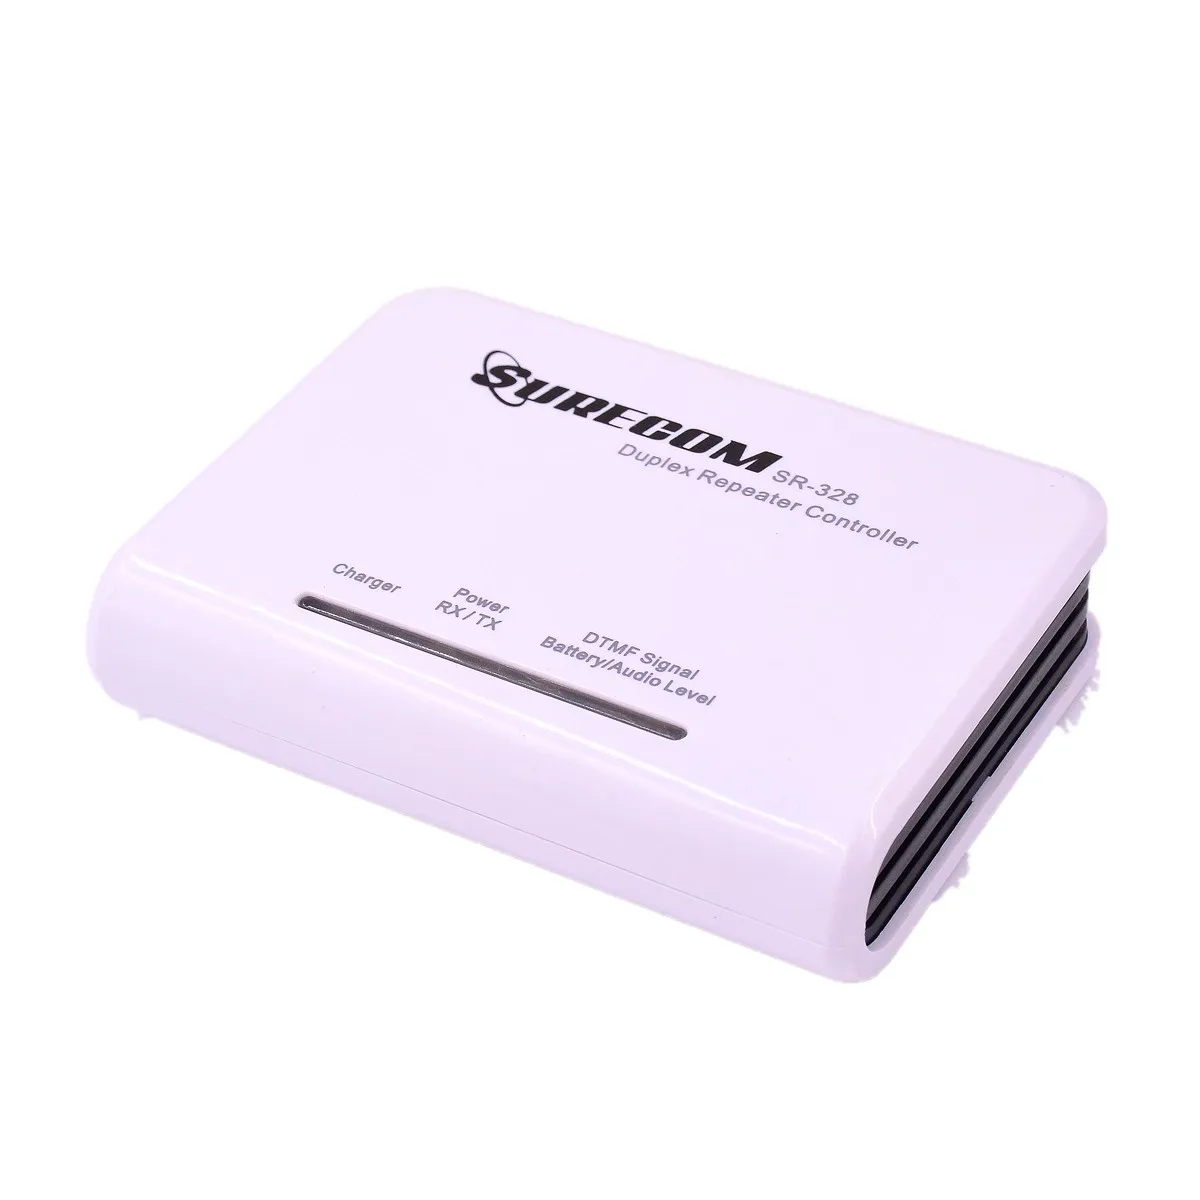 SURECOM SR328 Duplex Repeater Controller DTMF Signal for iCom Motorola Kenwood TYT Baofeng Ham Walkie Talkie Relay Box